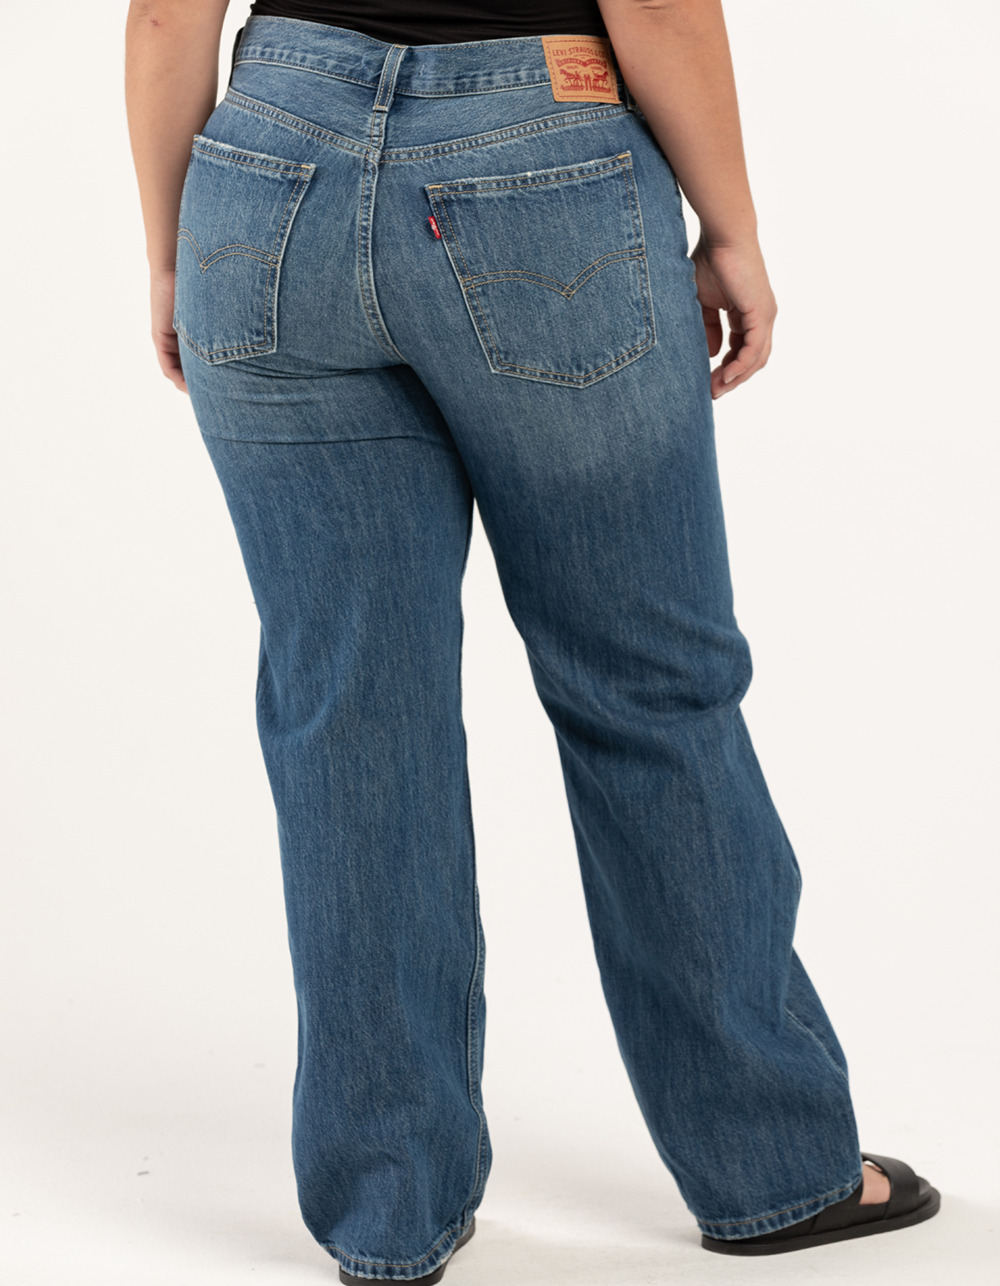 Levi's Women's Low Pro Jeans, Breathe Out - Medium Indigo, 25 at   Women's Jeans store